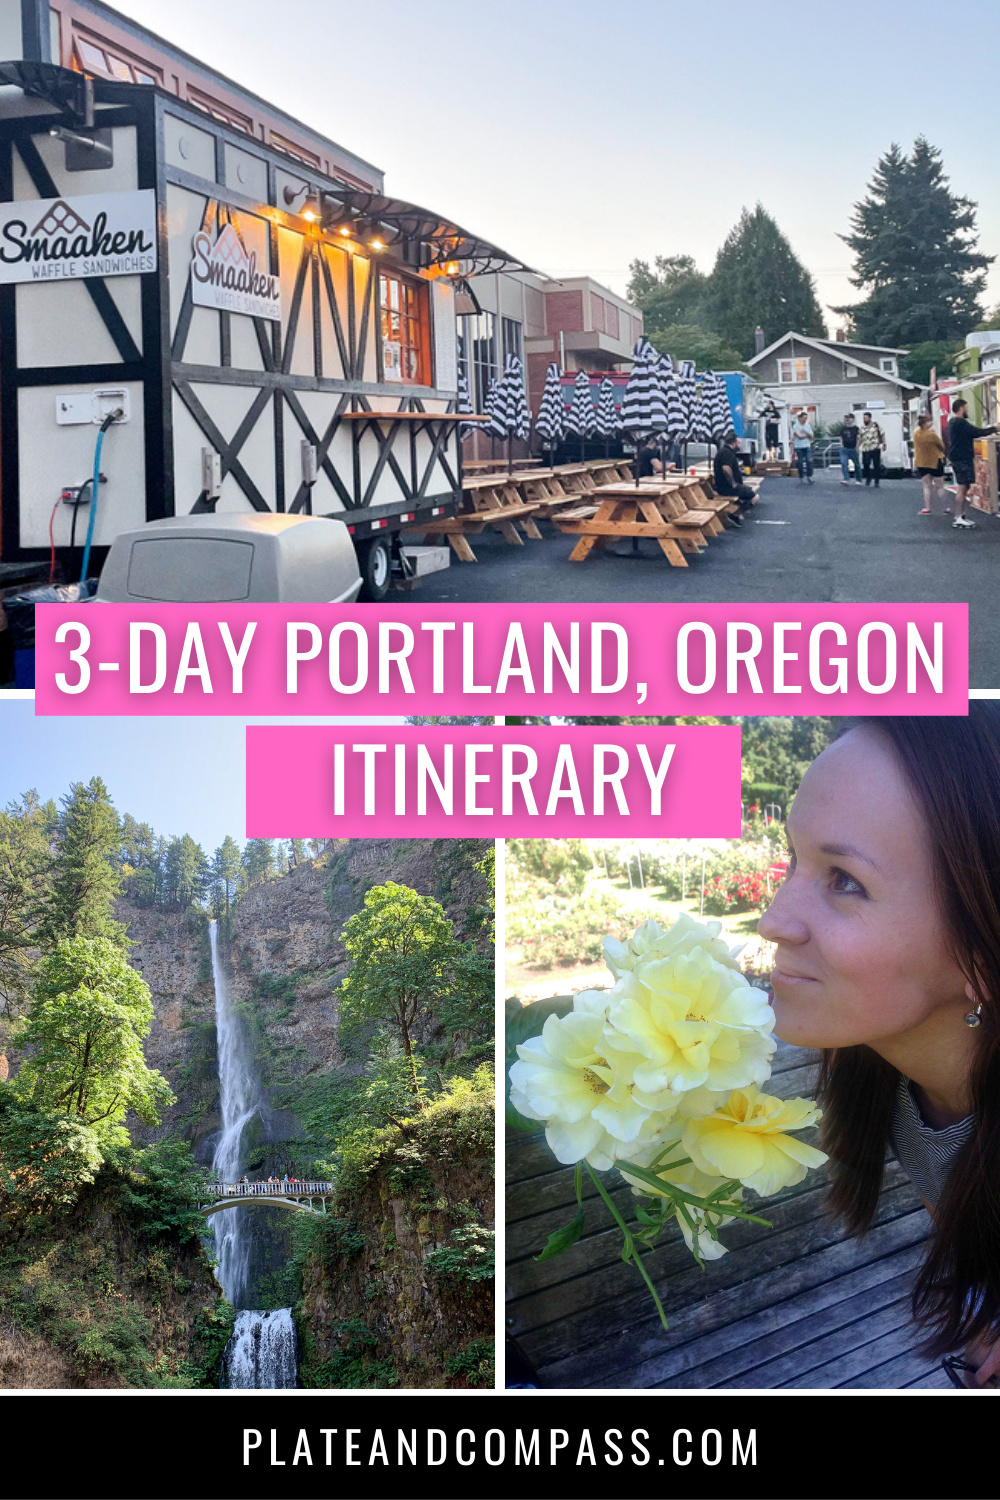 3-Day Portland, Oregon Itinerary